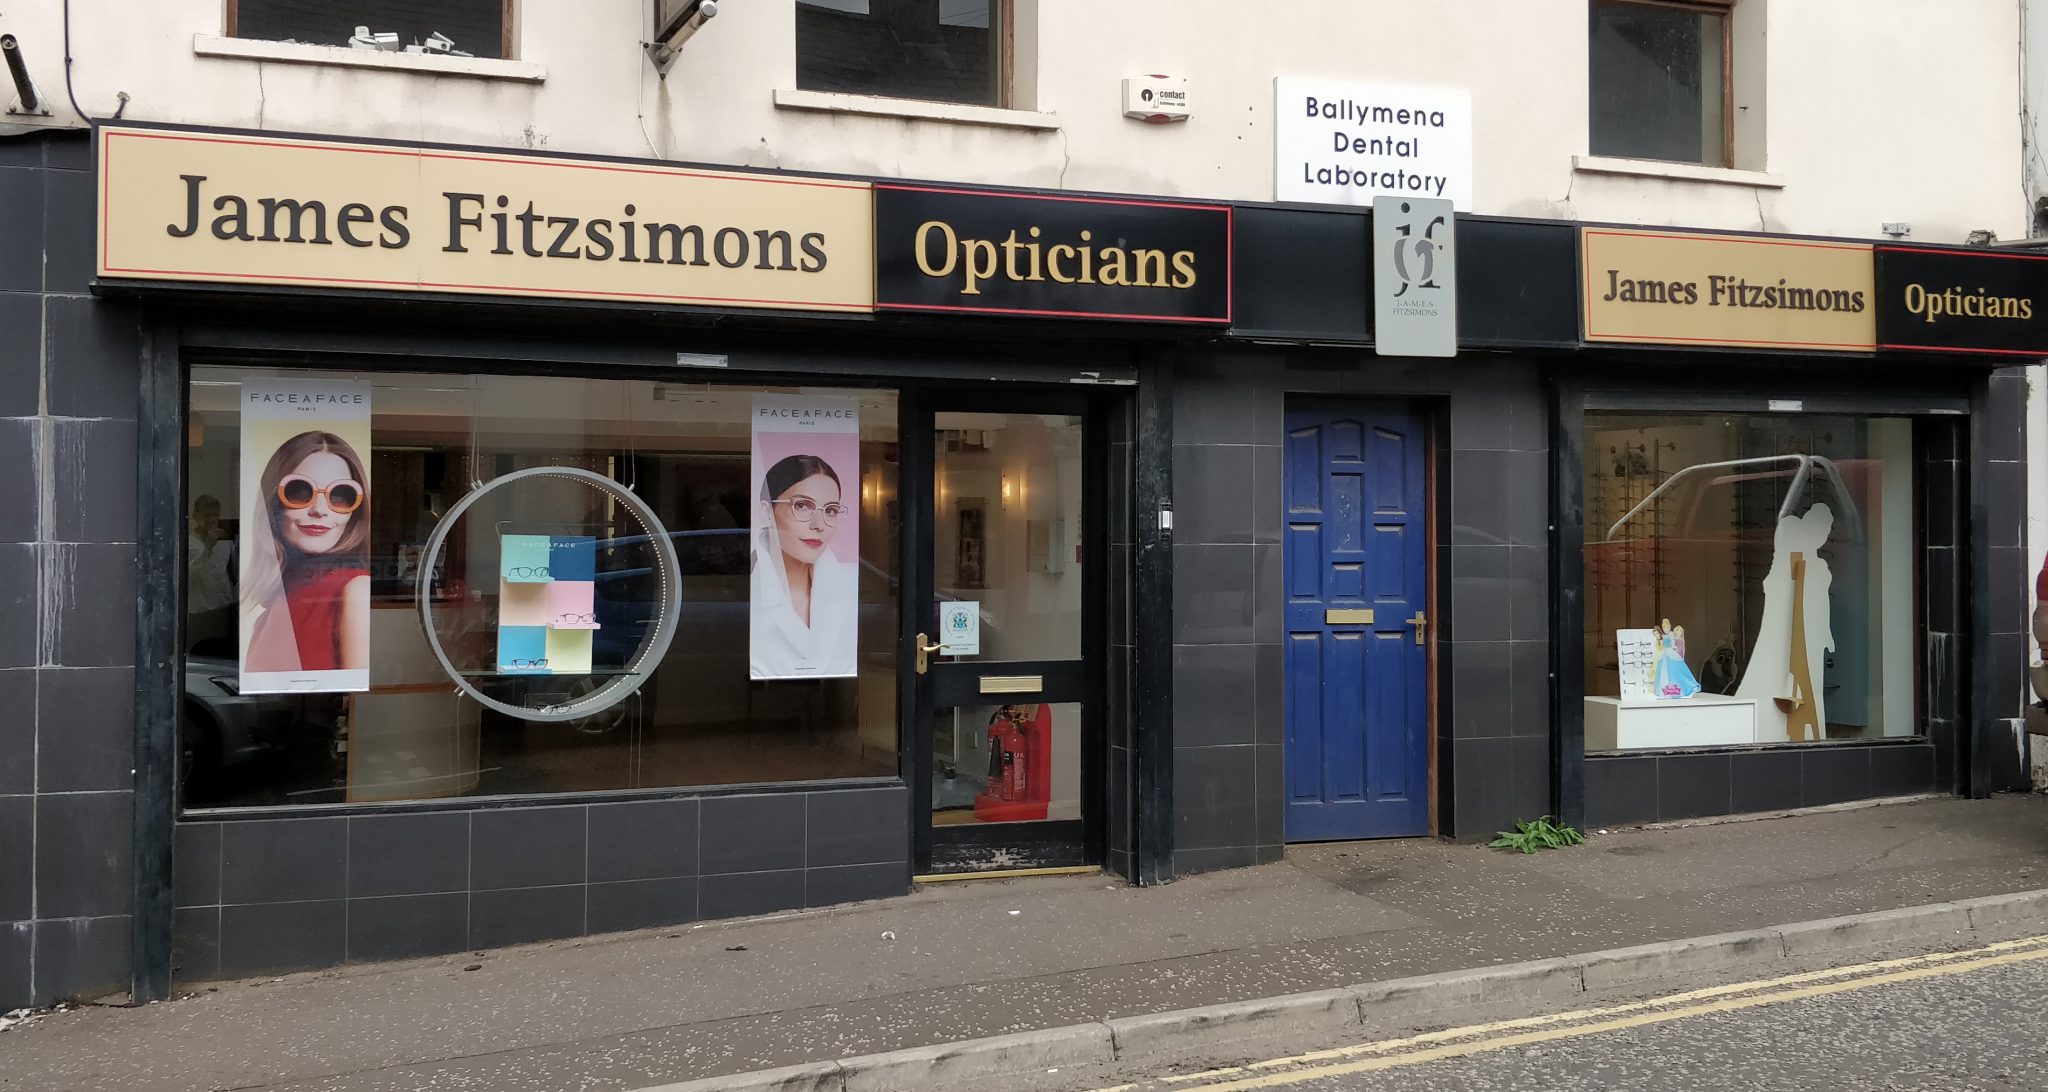 Fitzsimons Opticians, William Street, Ballymena